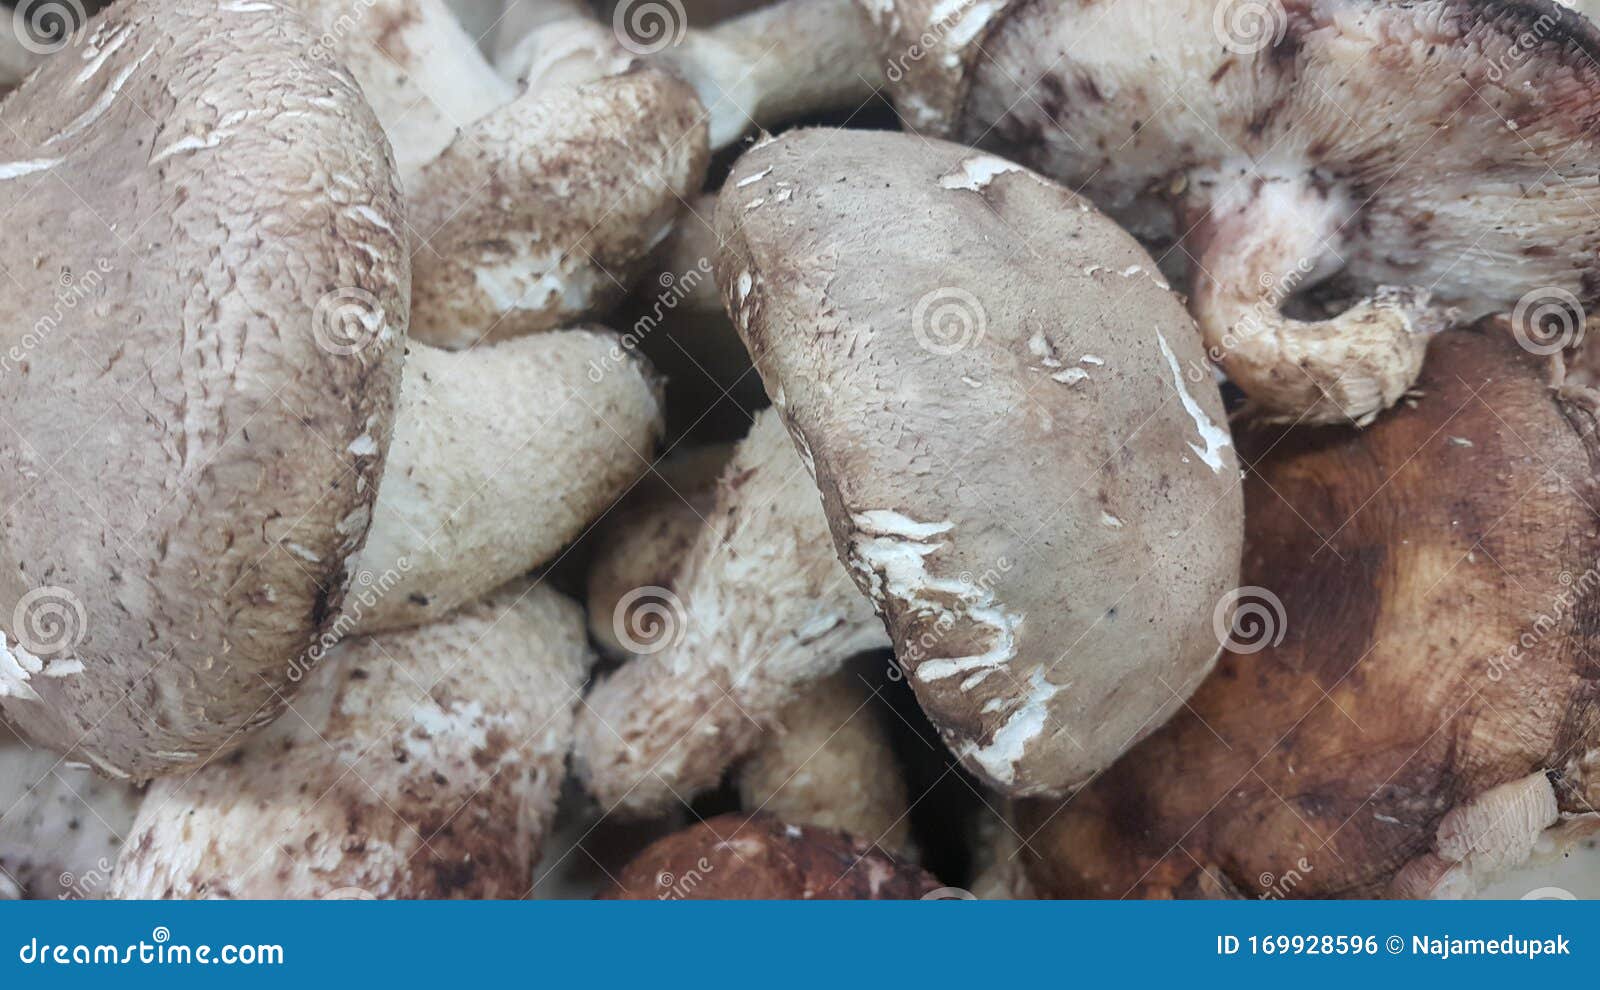 Closeup View of Big Pile of Fresh Harvested Mushrooms Stock Photo ...